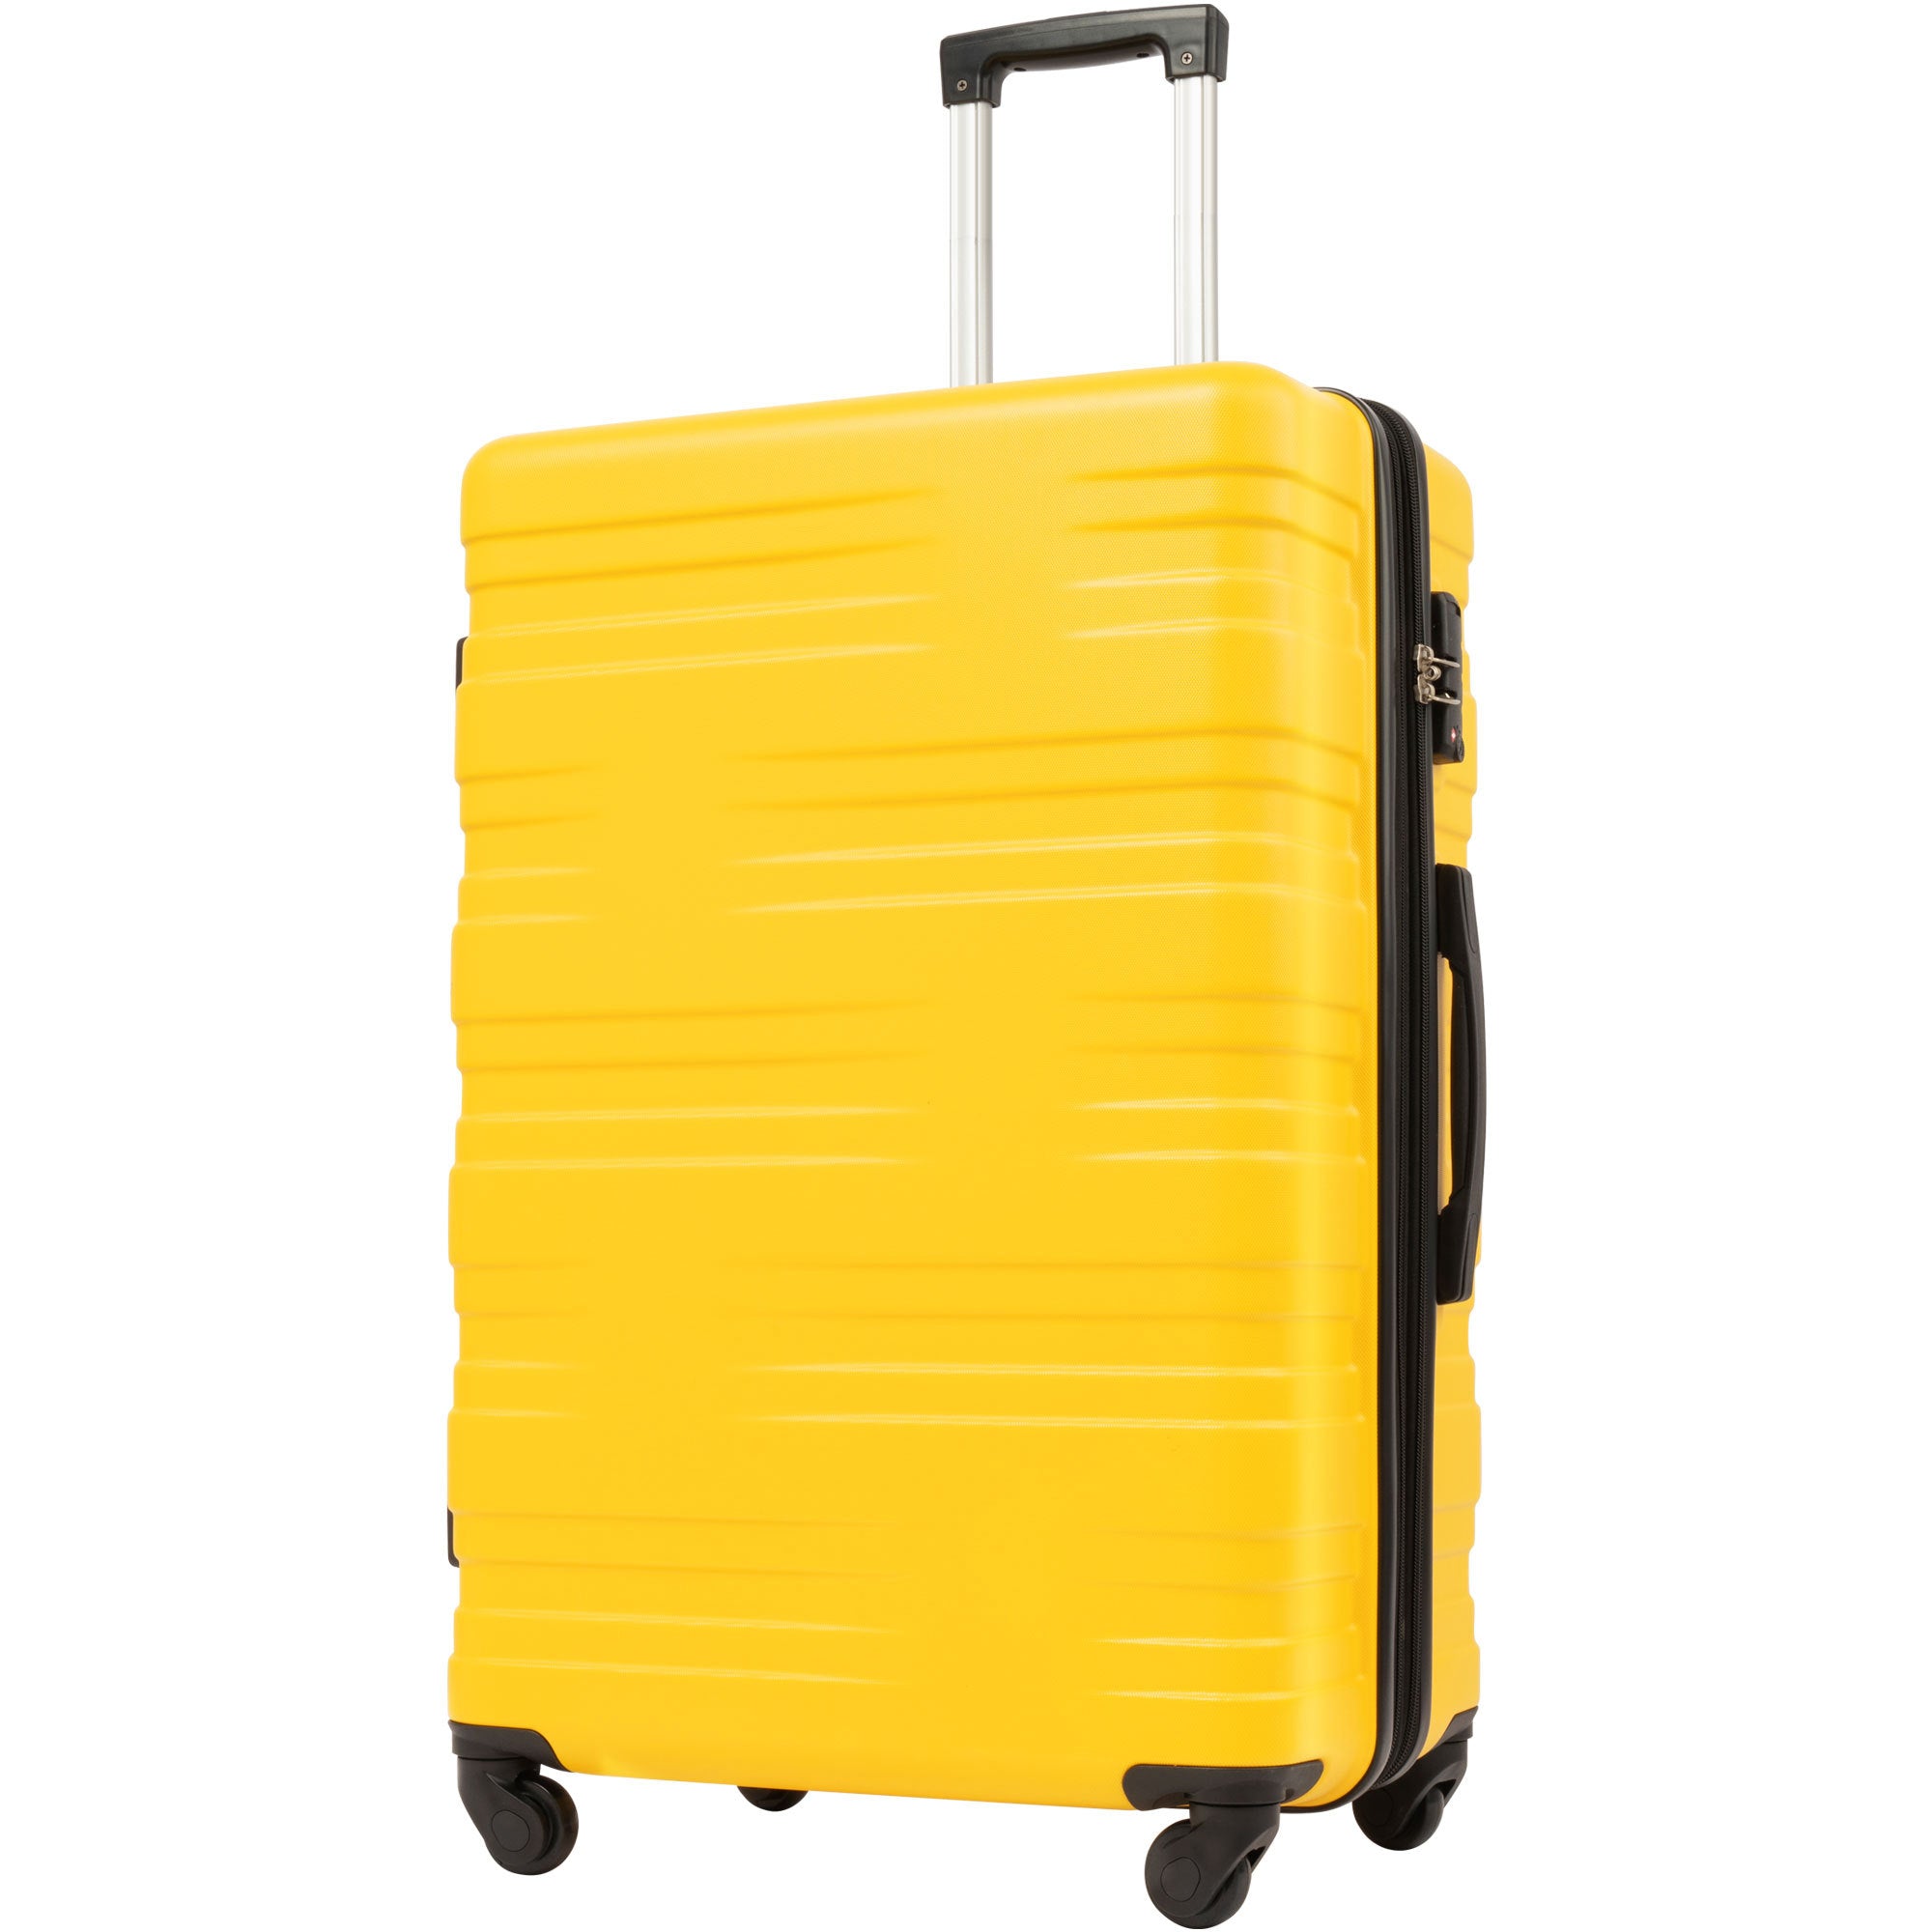 Merax Luggage with TSA Lock Spinner Wheels Hardside yellow-abs